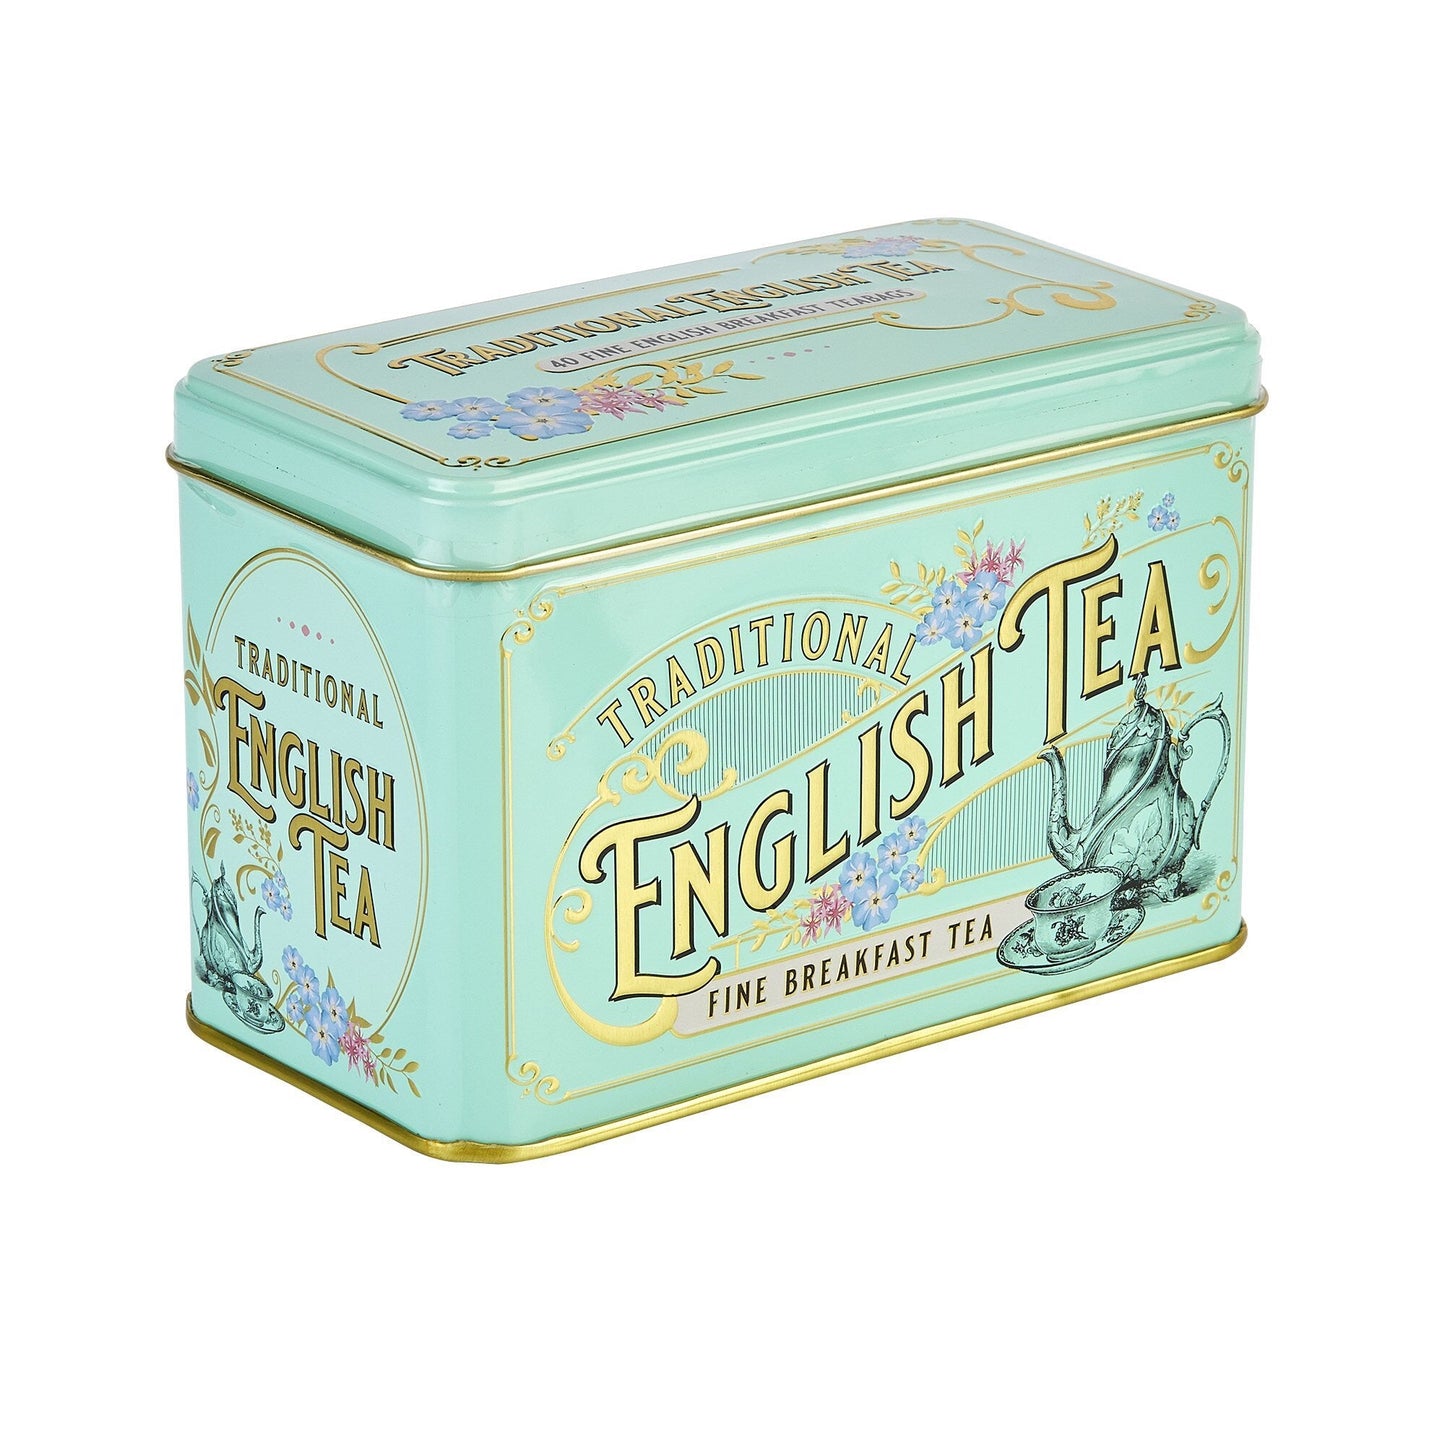 Vintage Victorian Tea Tin - 40 Breakfast Teabags